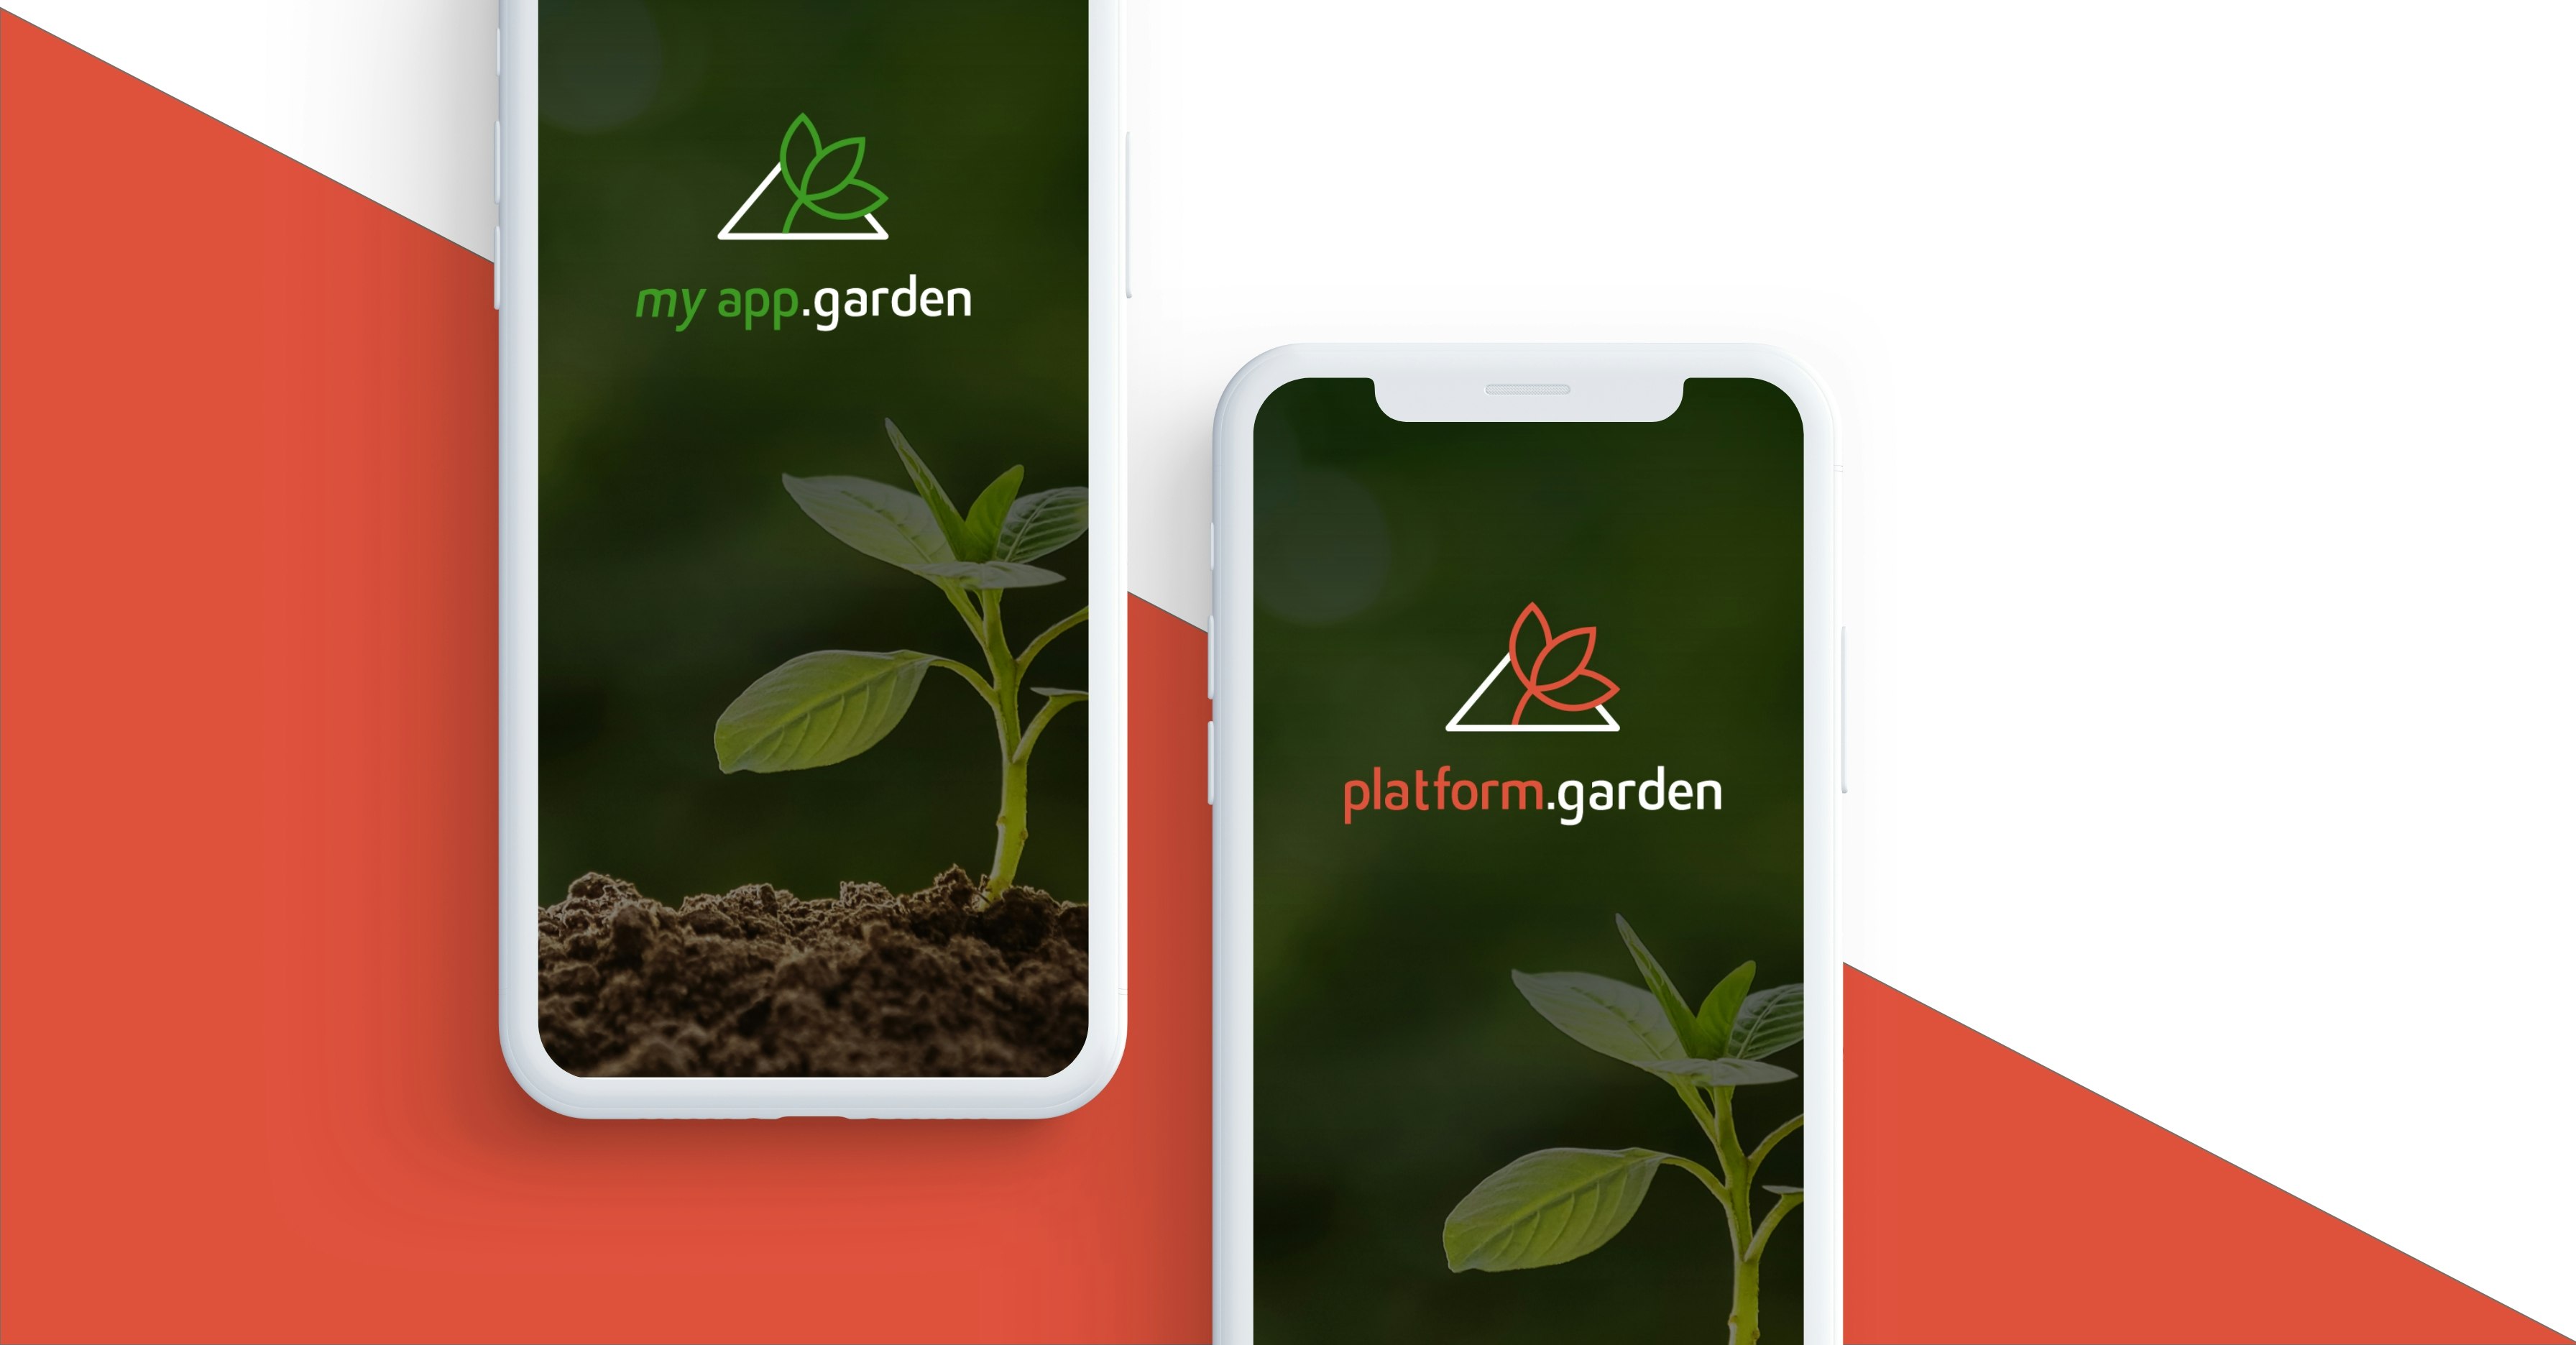 Platform.garden mobile app